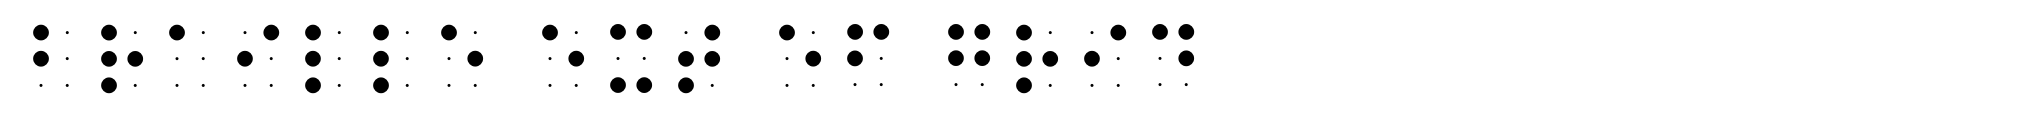 Braille Ext EF Grid image